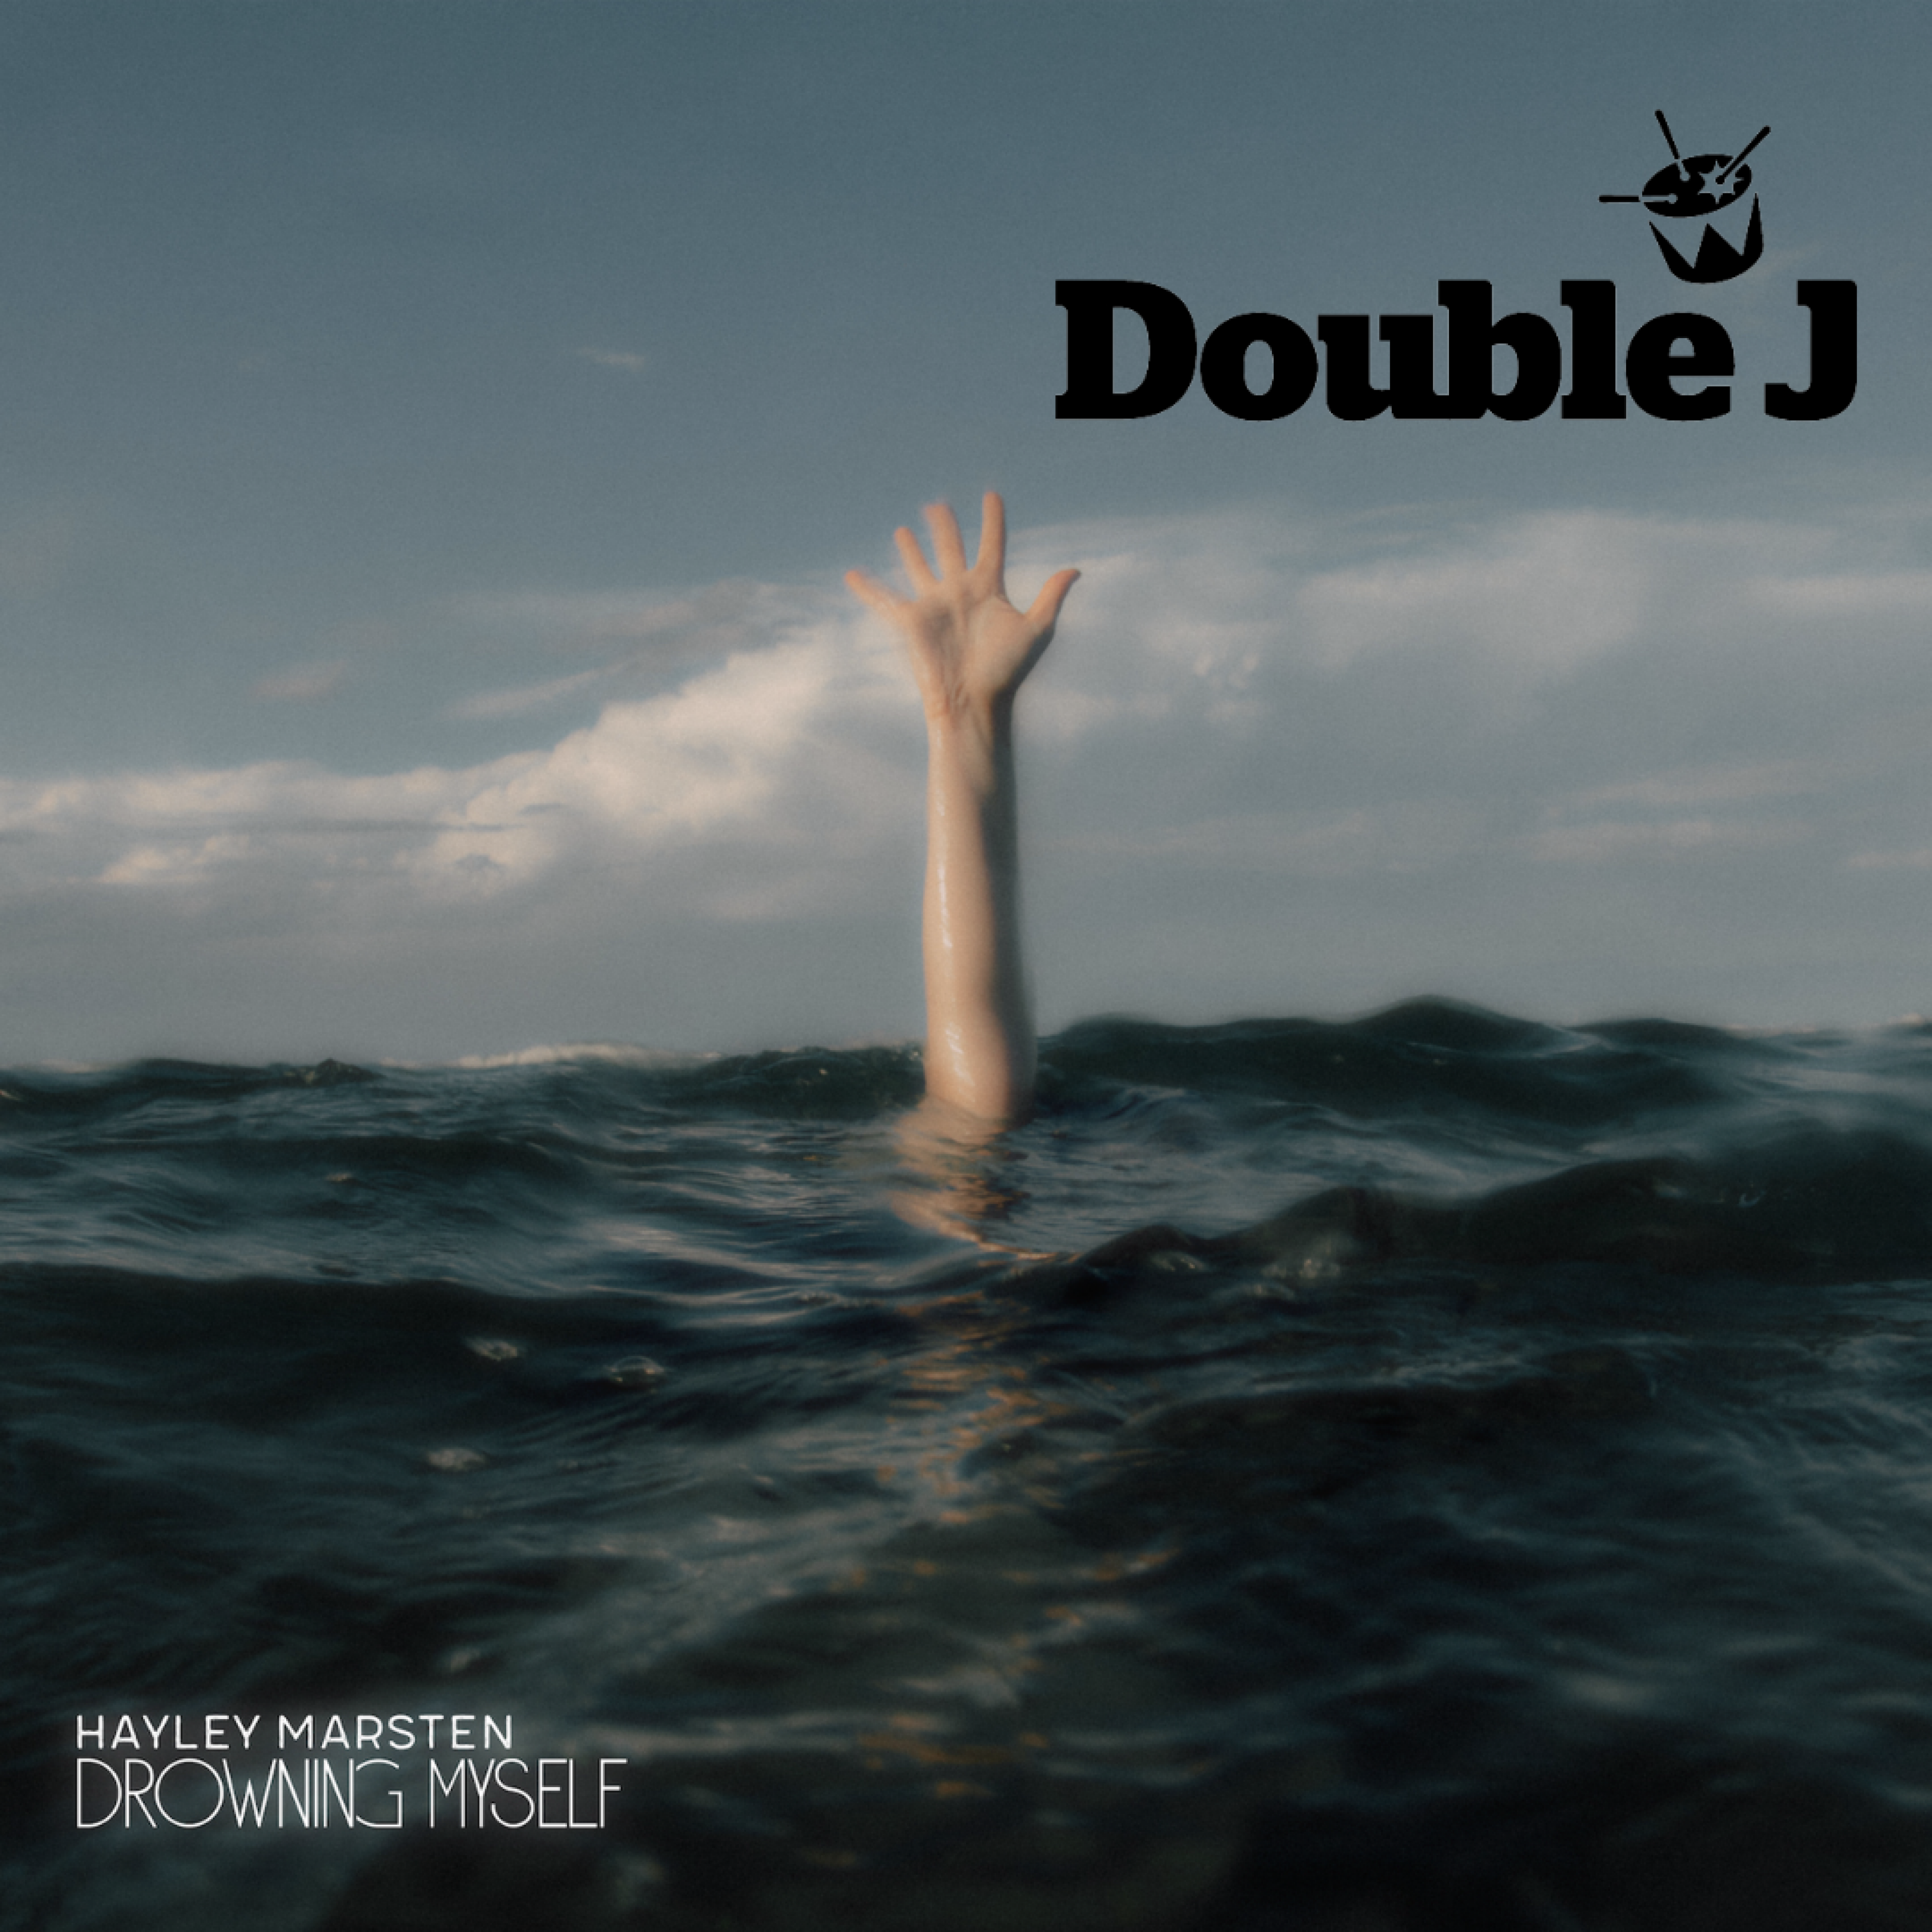 Hayley Marsten - Drowning Myself Airplay via Double J